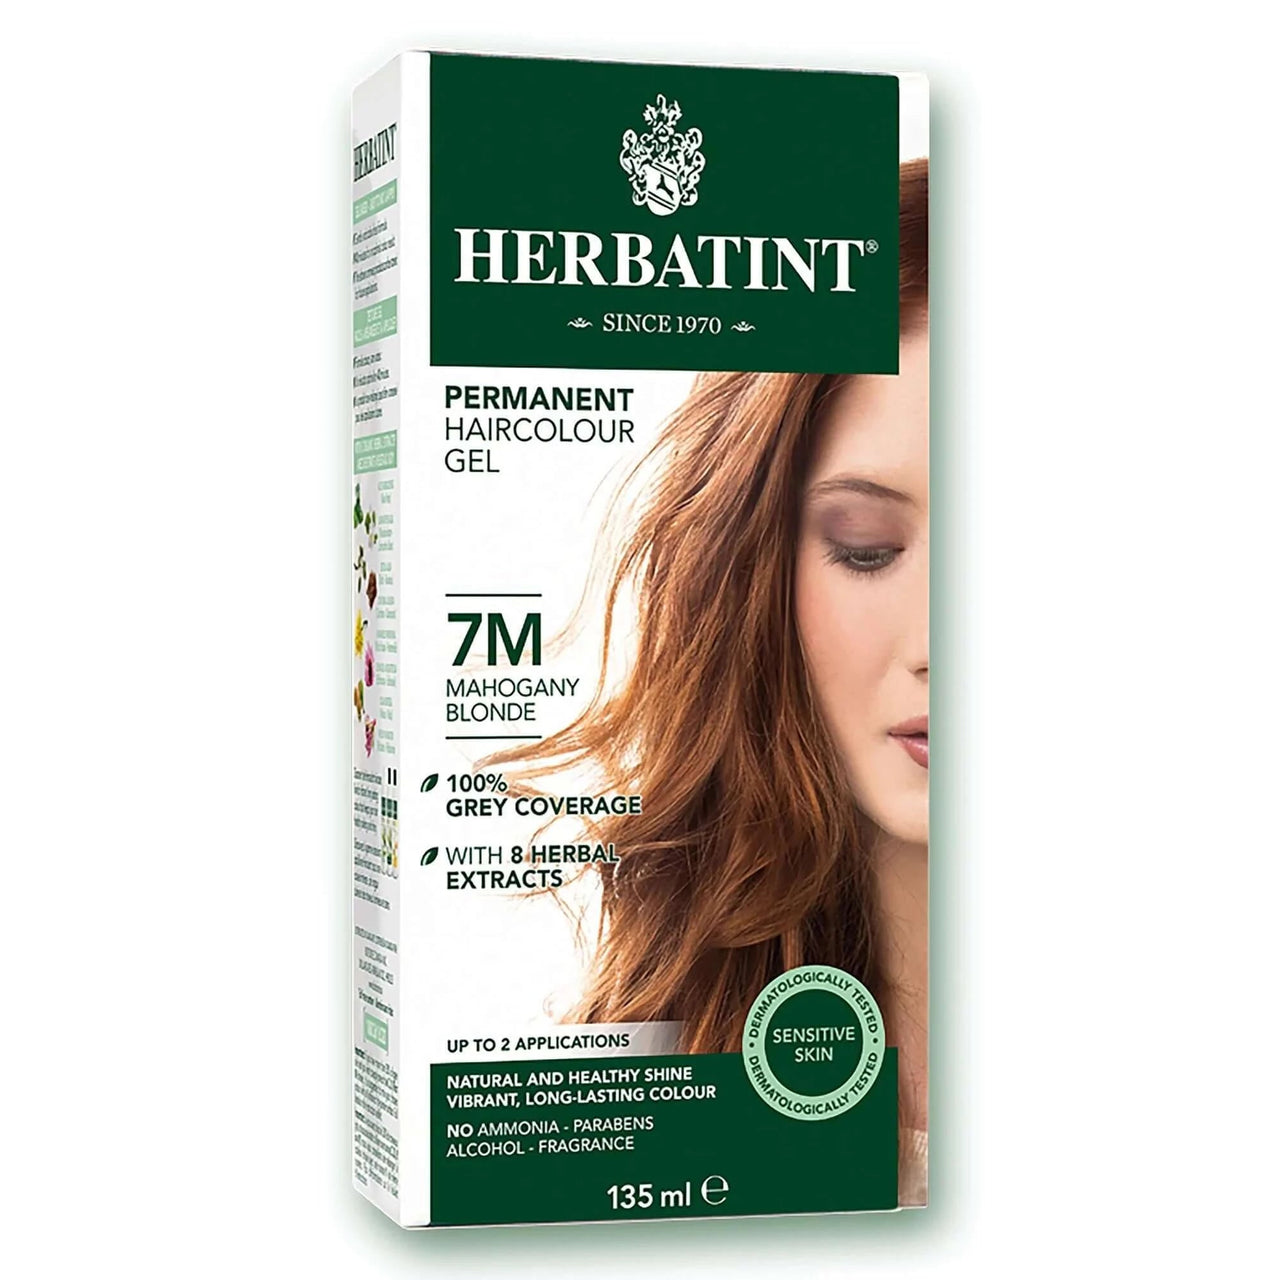 Herbatint 7M Mahogany Blonde Permanent Haircolour Gel 135mL - Nutrition Plus